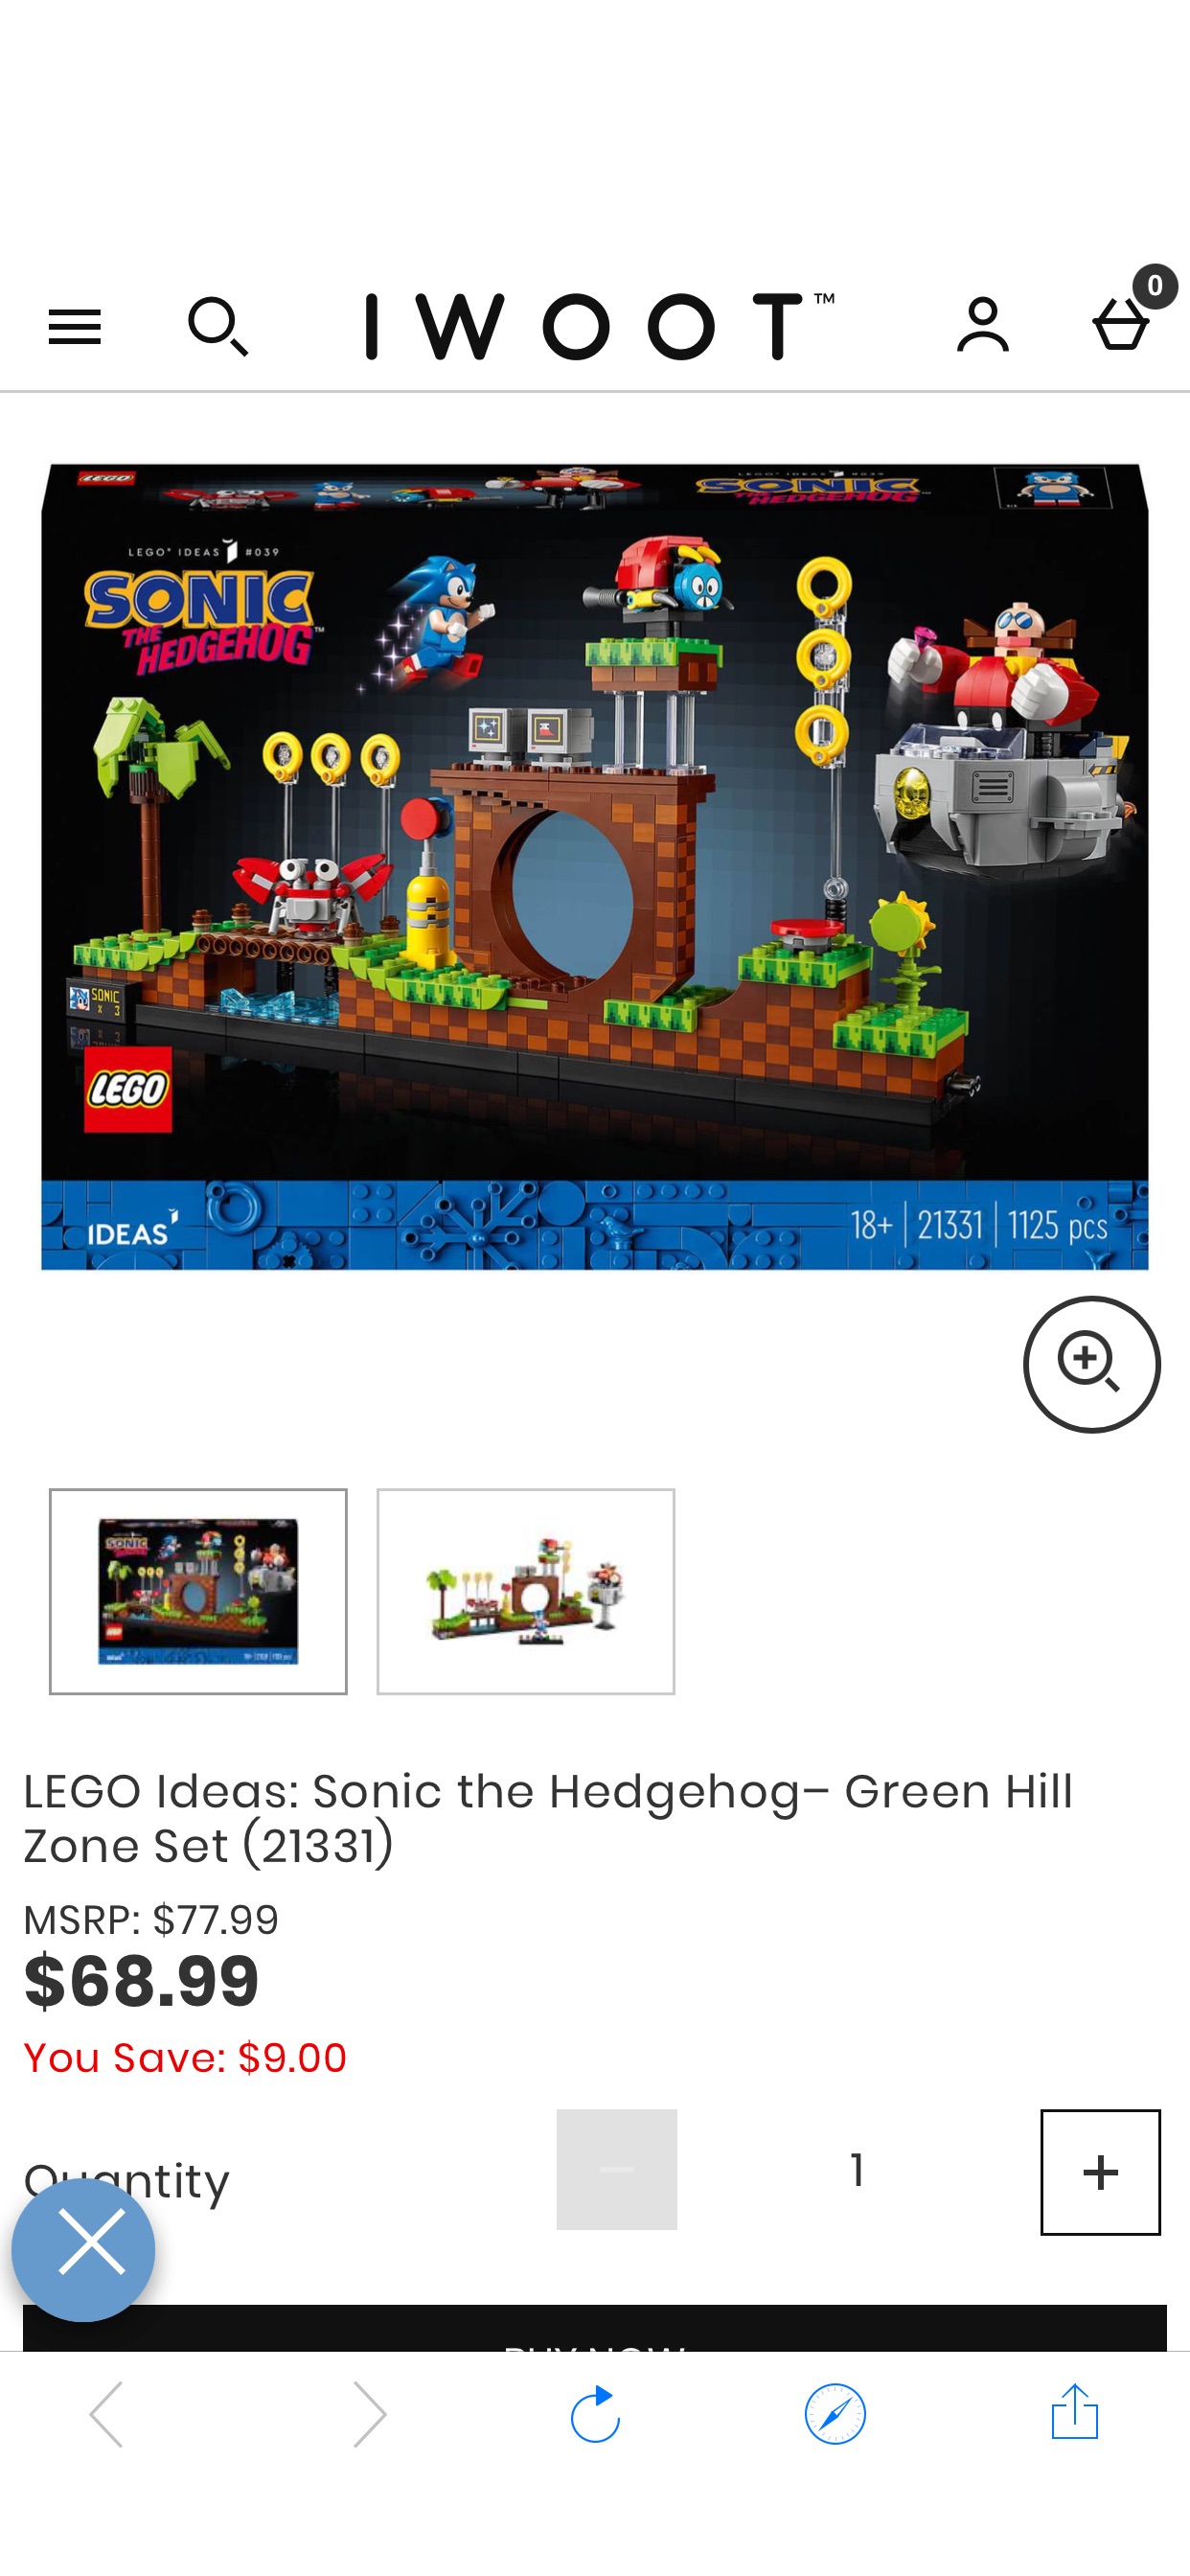 LEGO Ideas: Sonic the Hedgehog– Green Hill Zone Set (21331) - IWOOT US 乐高刺猬索尼克绿叶山丘